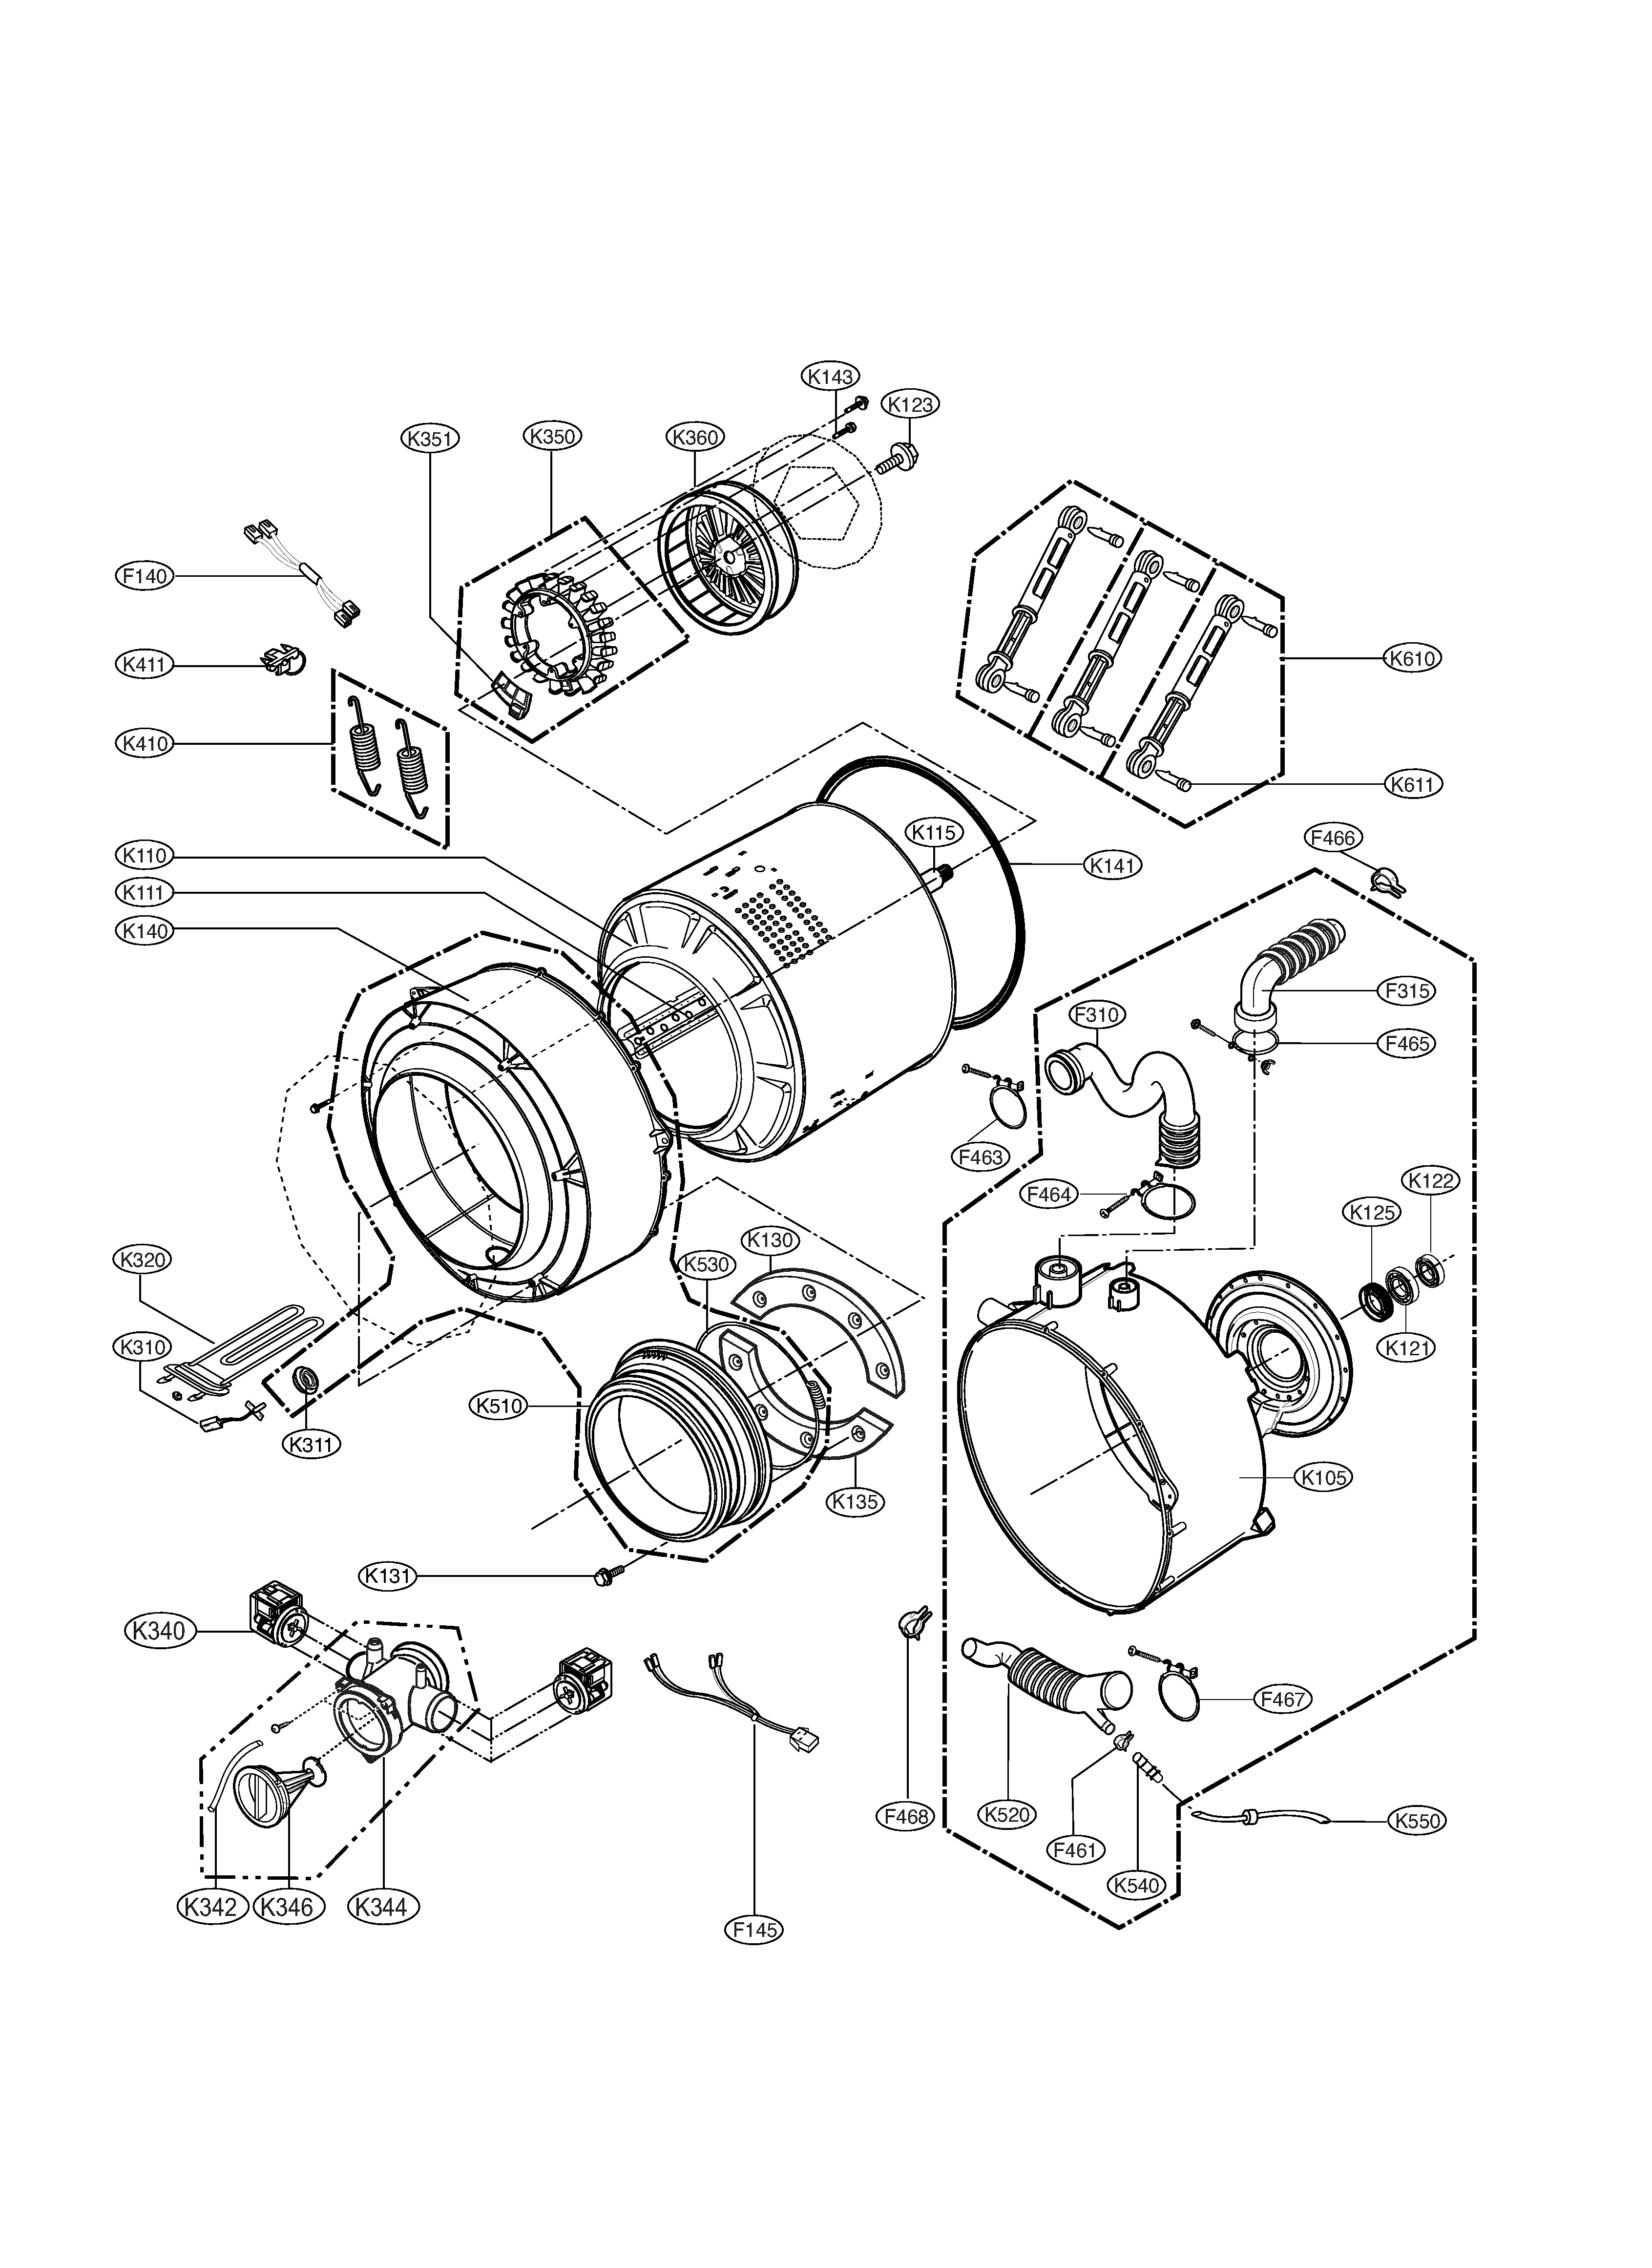 Lg Wm2277hs Washer Parts Sears Partsdirect